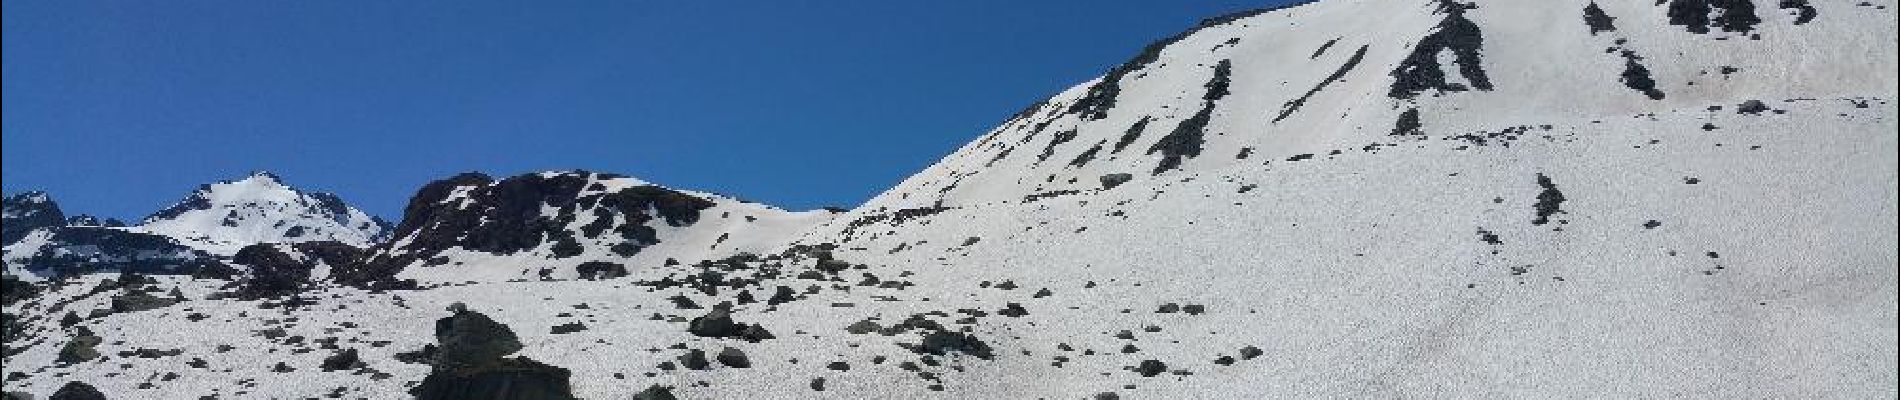 POI Nendaz - neige - Photo